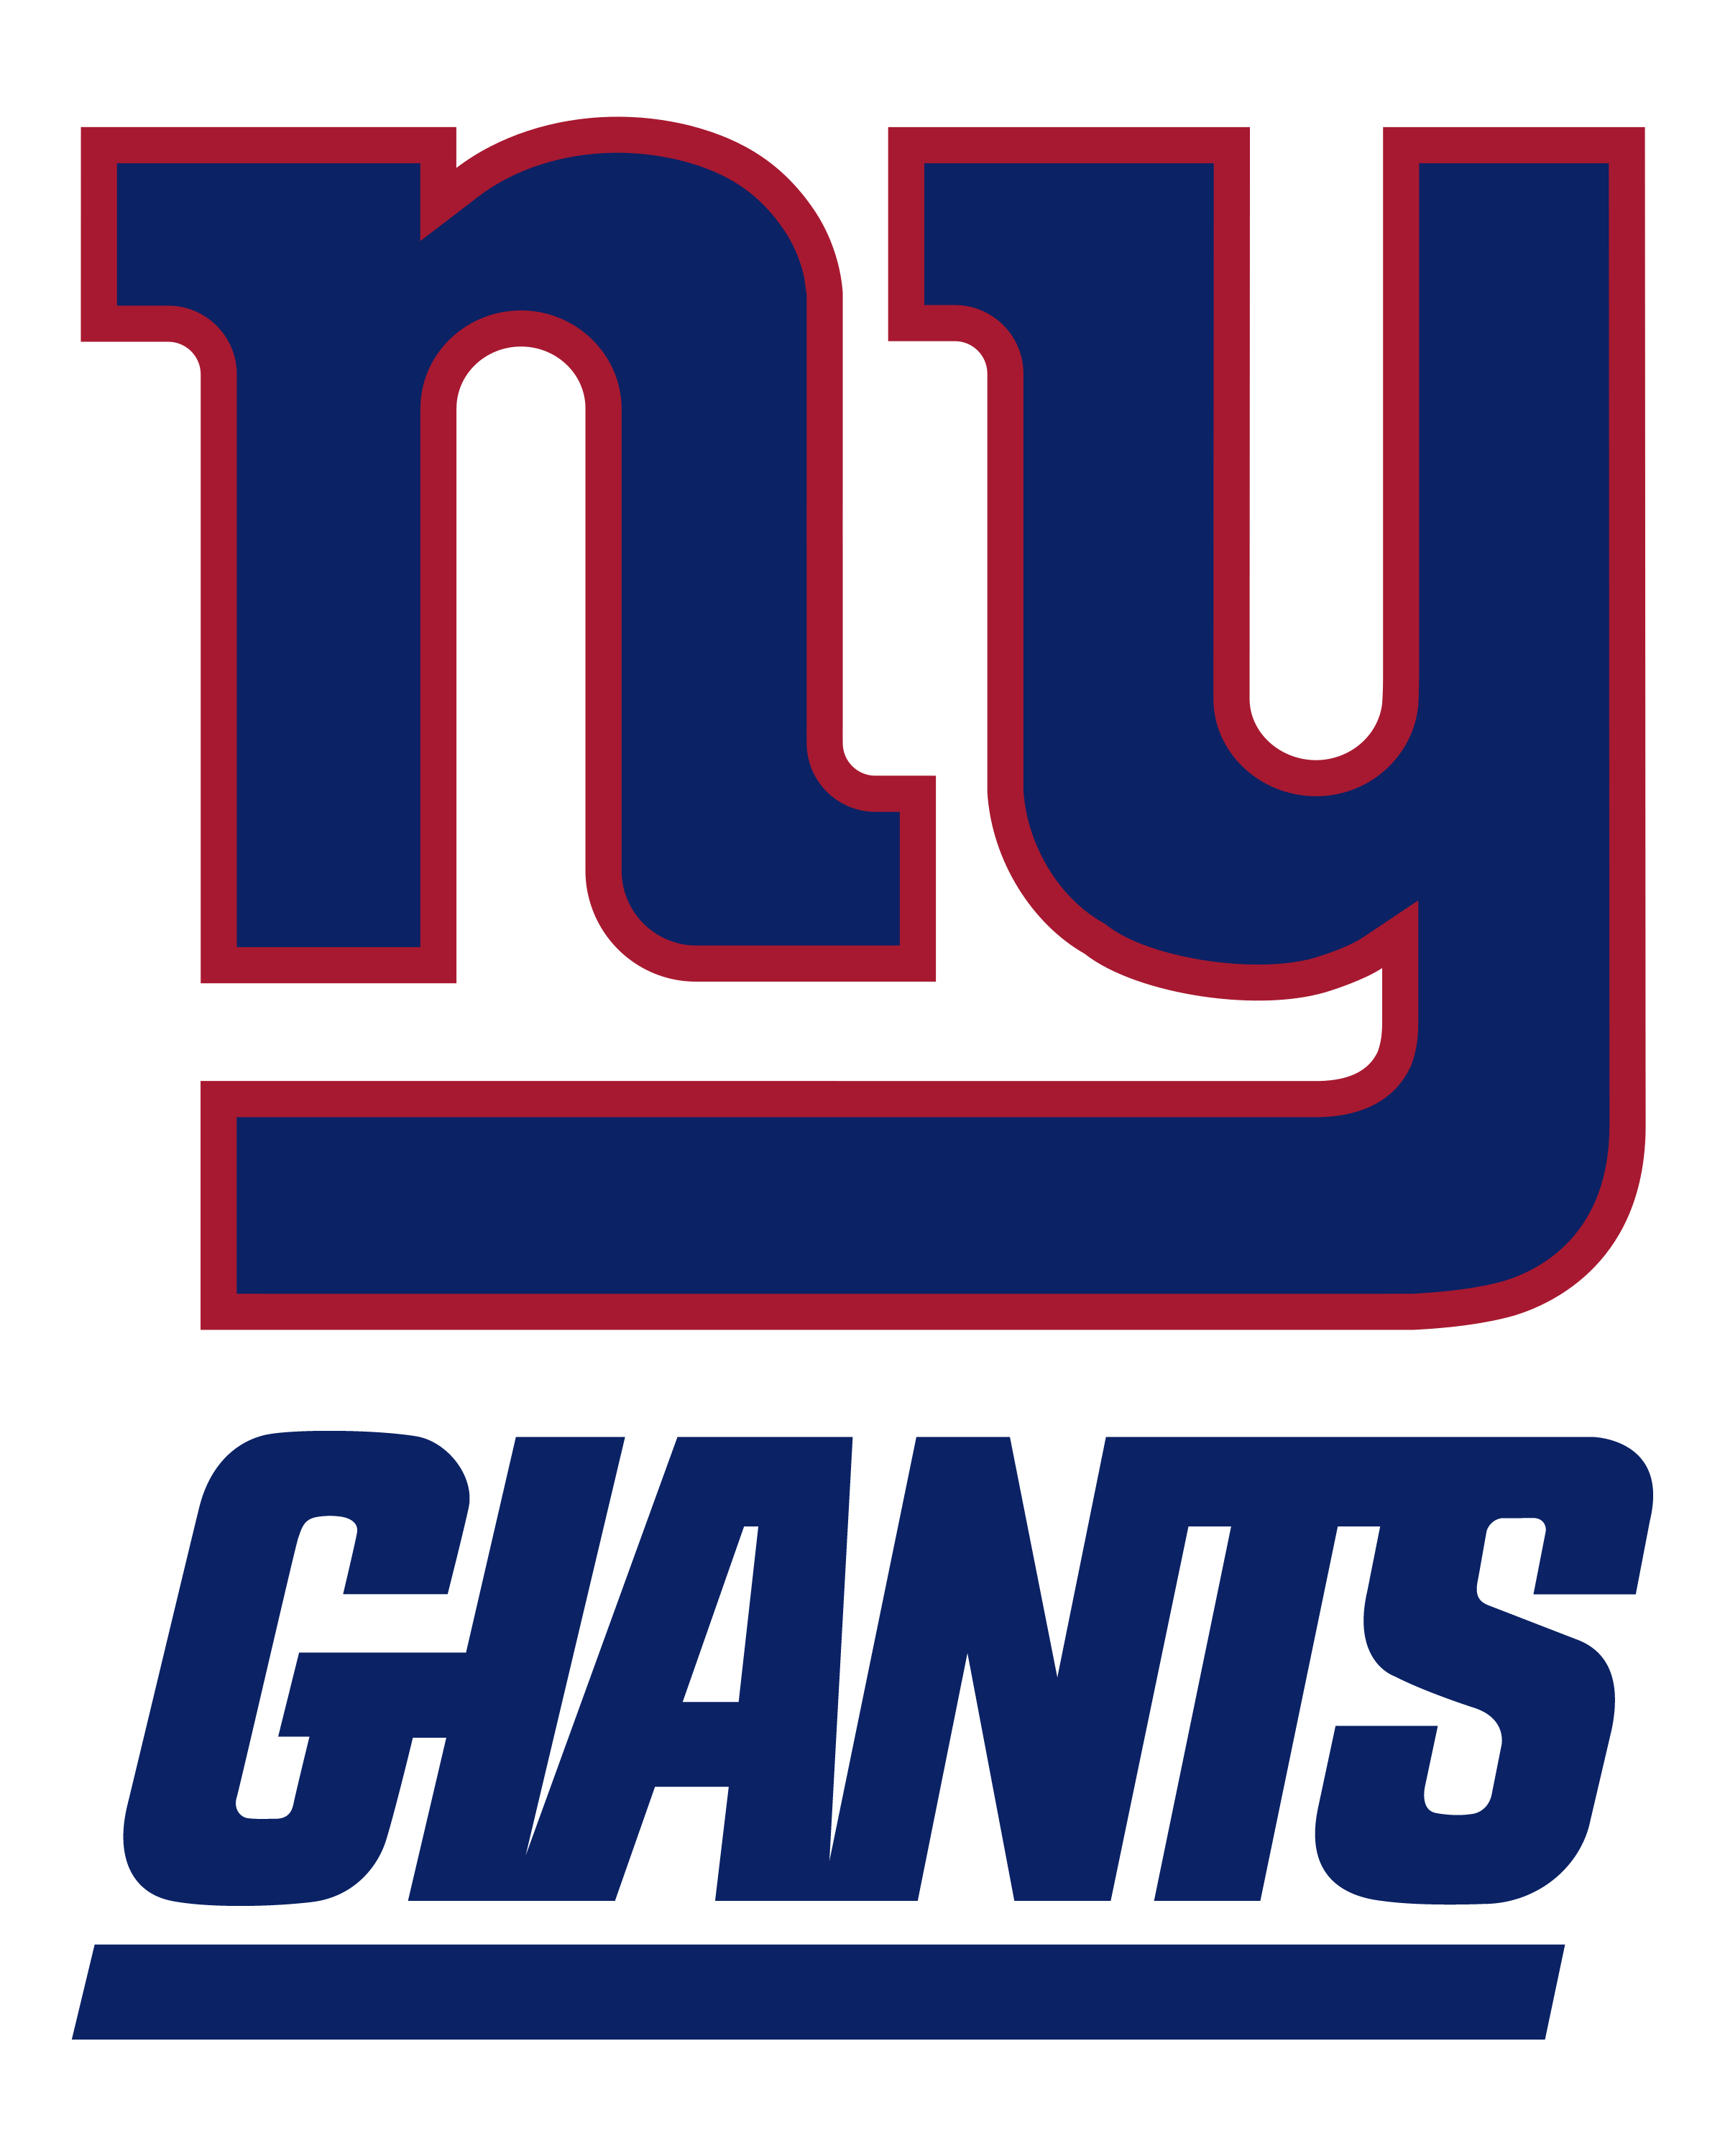 New York Giants Logo - New York Giants Logo PNG Transparent & SVG Vector - Freebie Supply